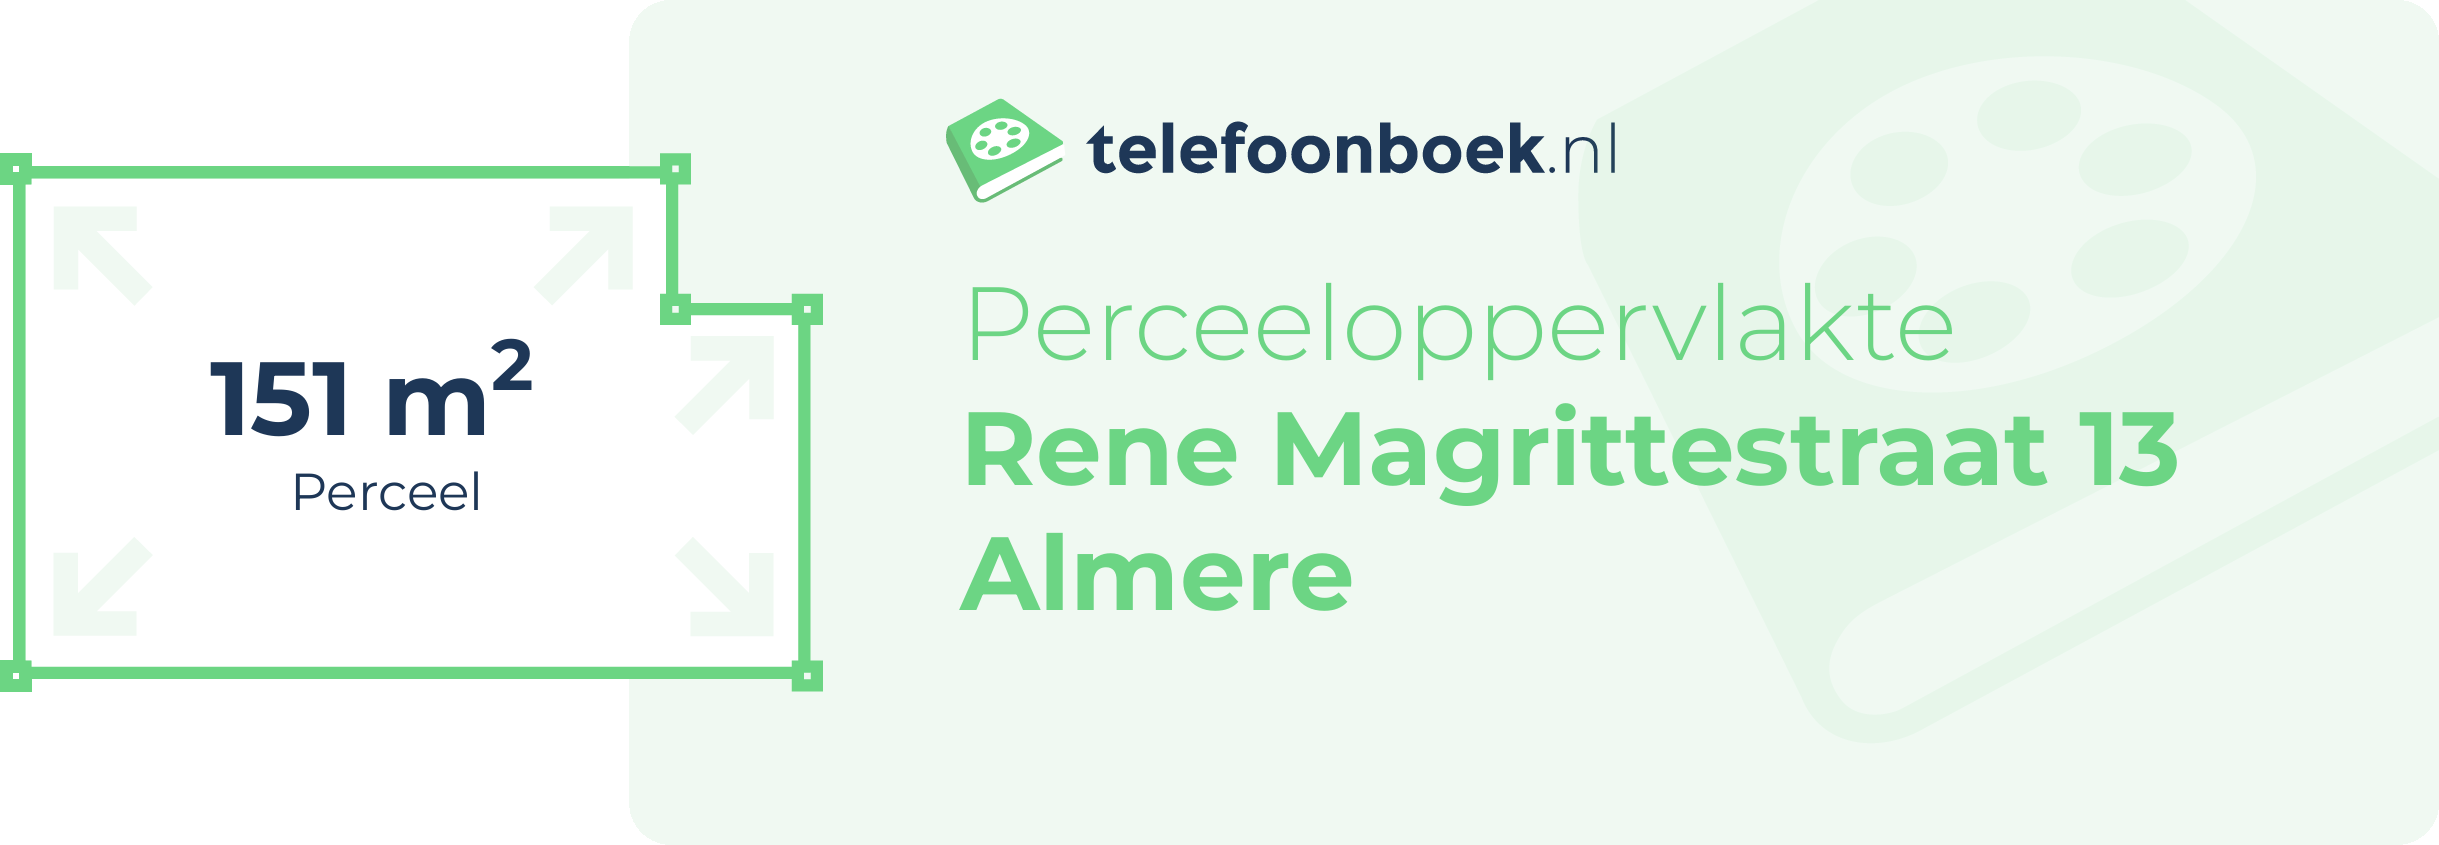 Perceeloppervlakte Rene Magrittestraat 13 Almere